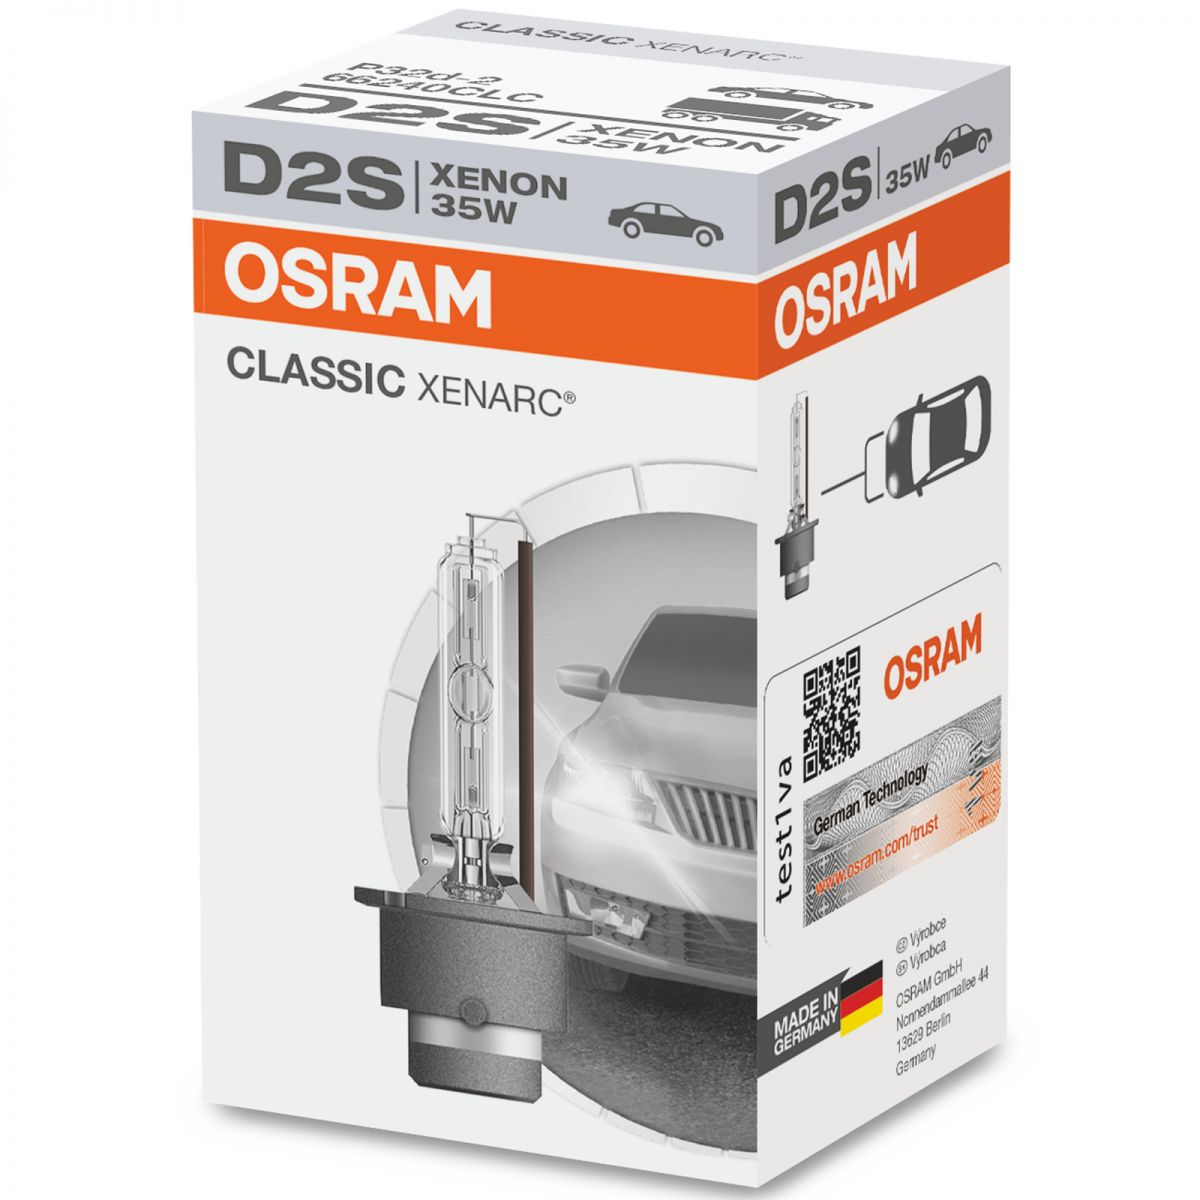 OSRAM D2S Classic XENARC OEM Xenon Light Bulb